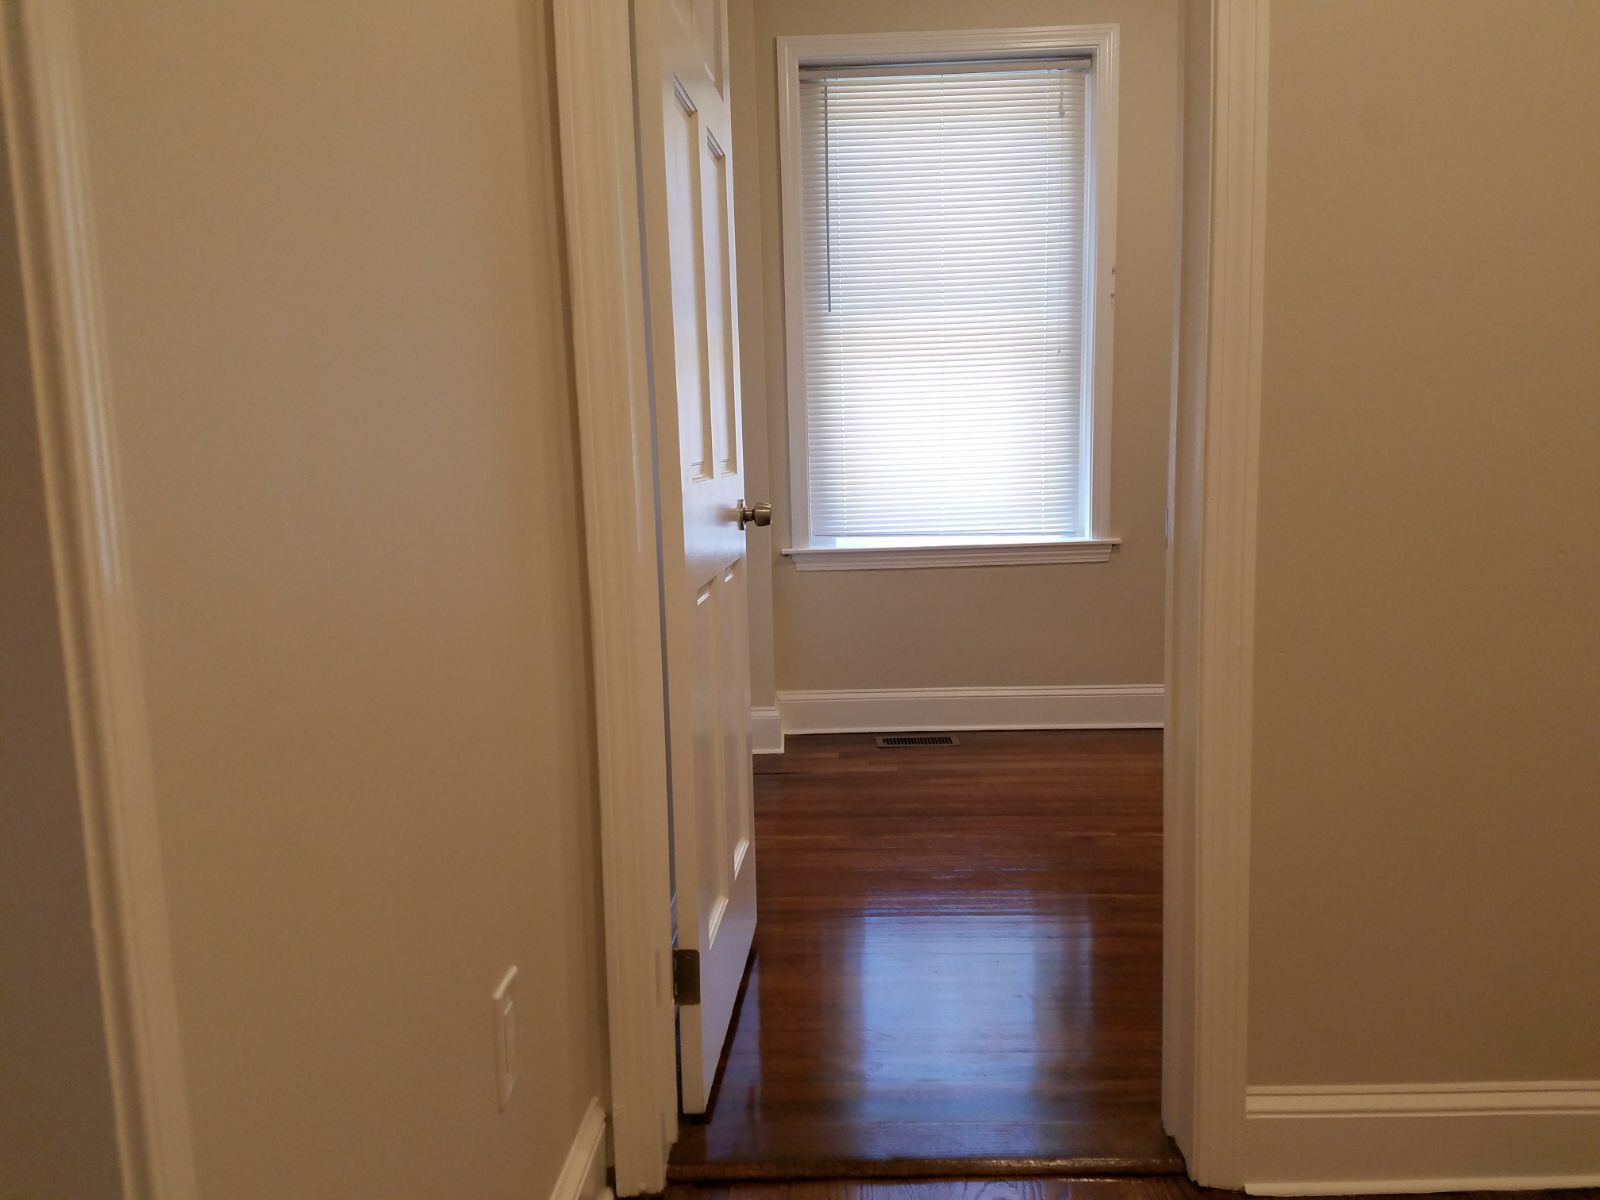 Photos of apartment on Townsend St.,Boston MA 02119